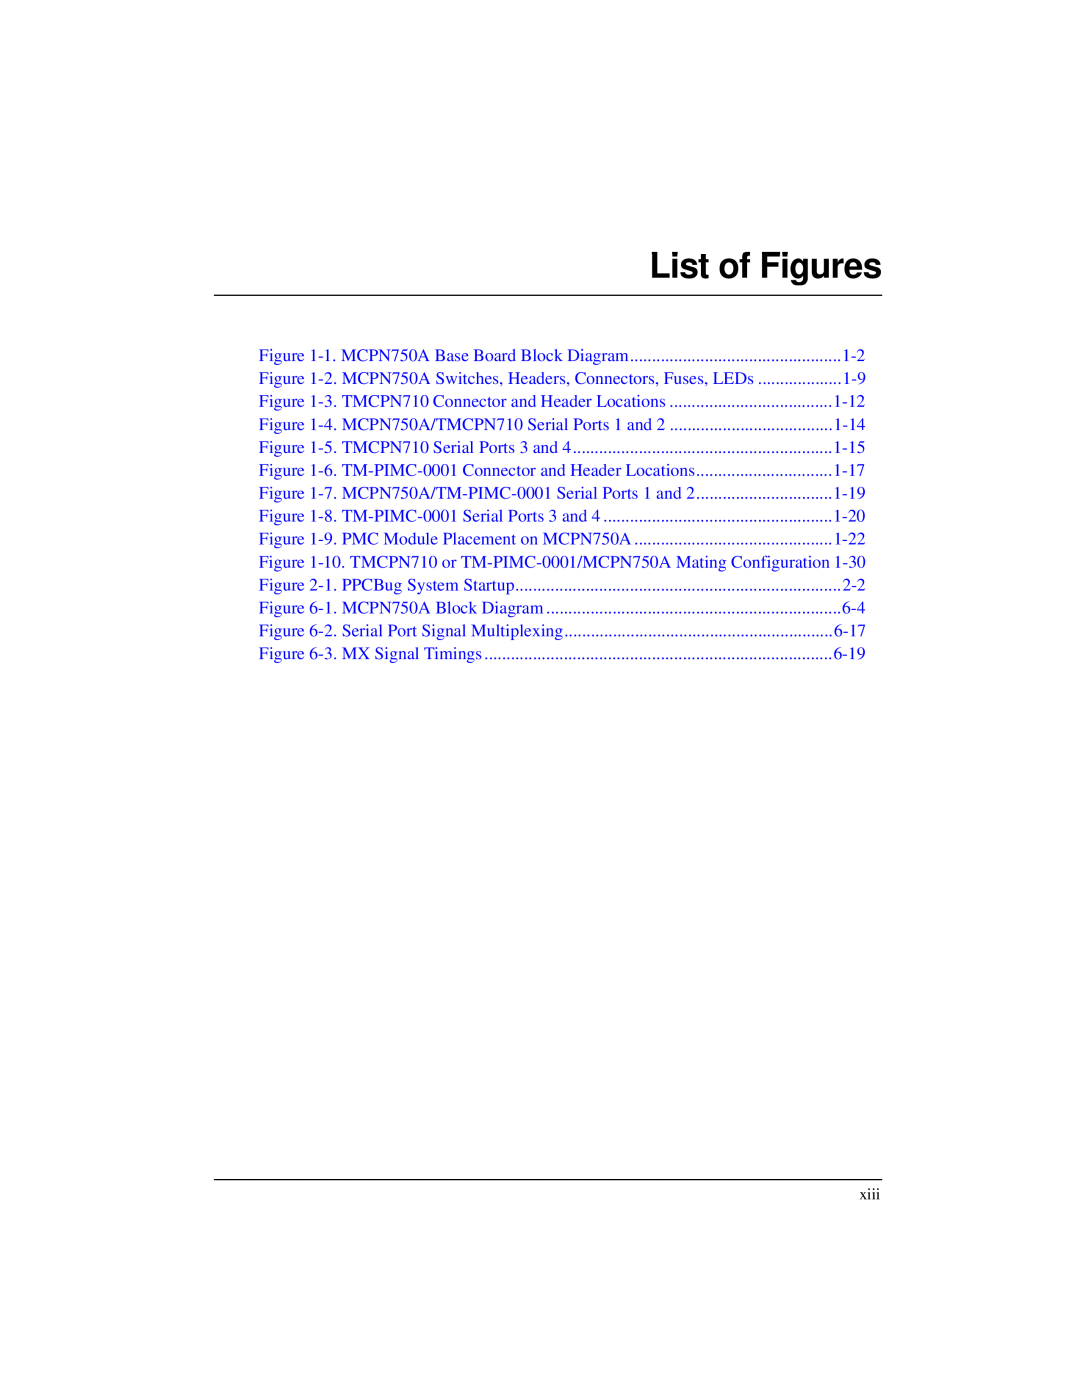 Motorola IH5, MCPN750A manual List of Figures 